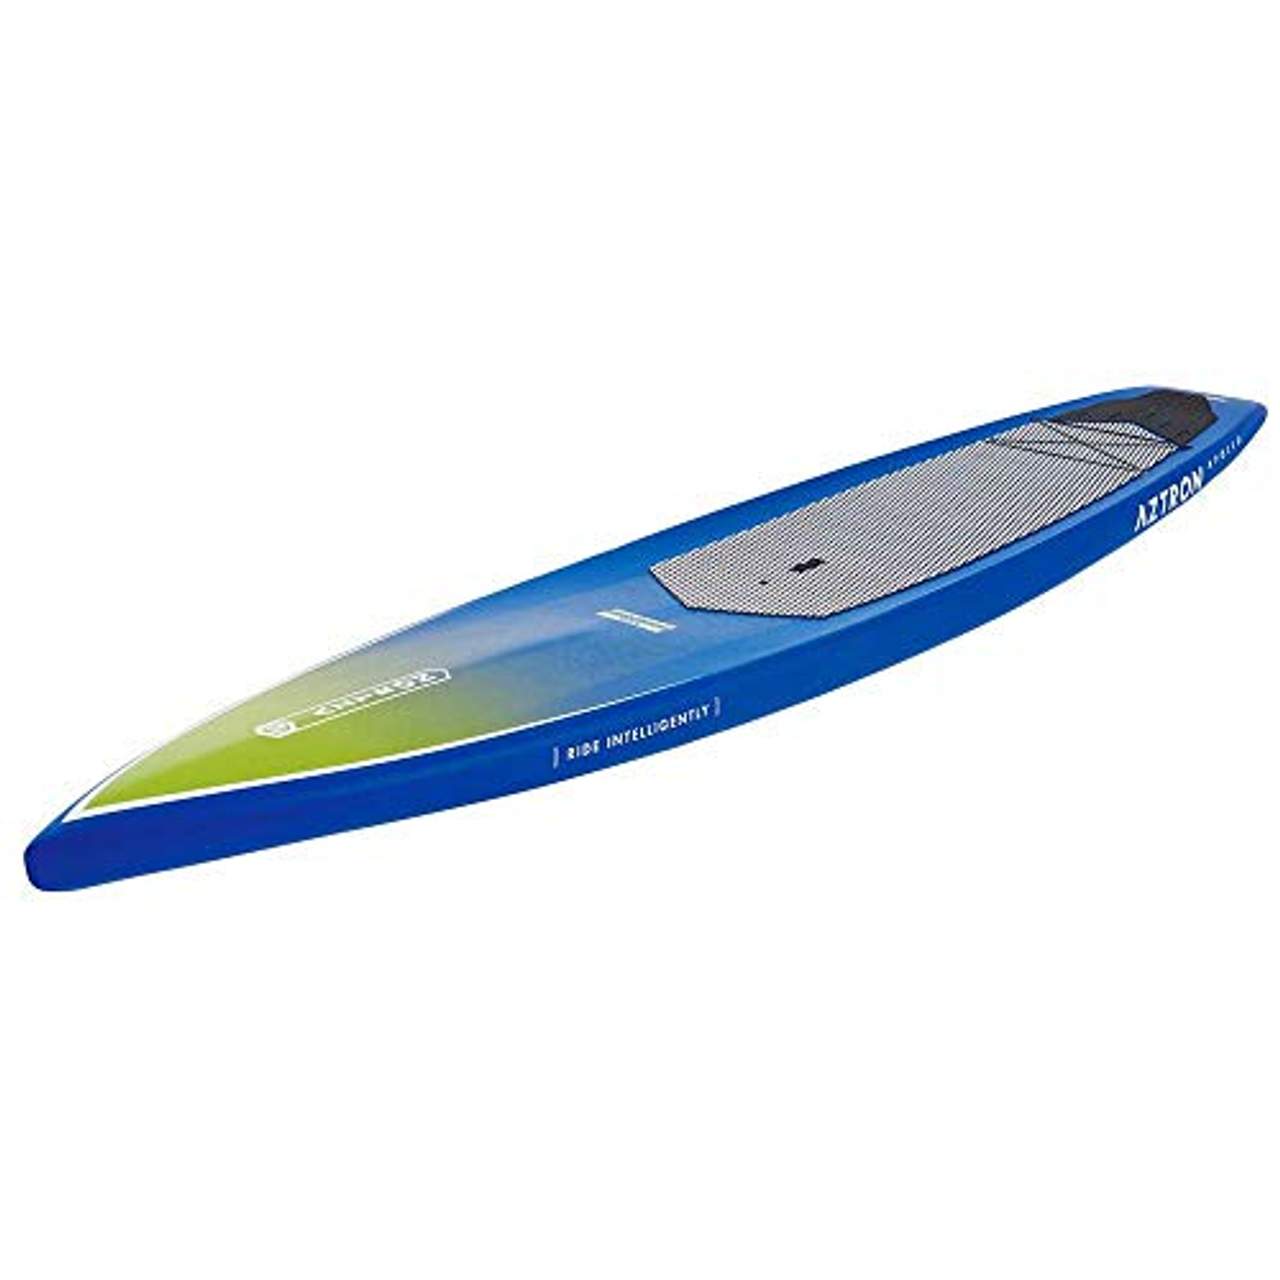 Aztron Apollo Epoxy 12'6" Fiberglass Board SUP Stand up Paddle Board